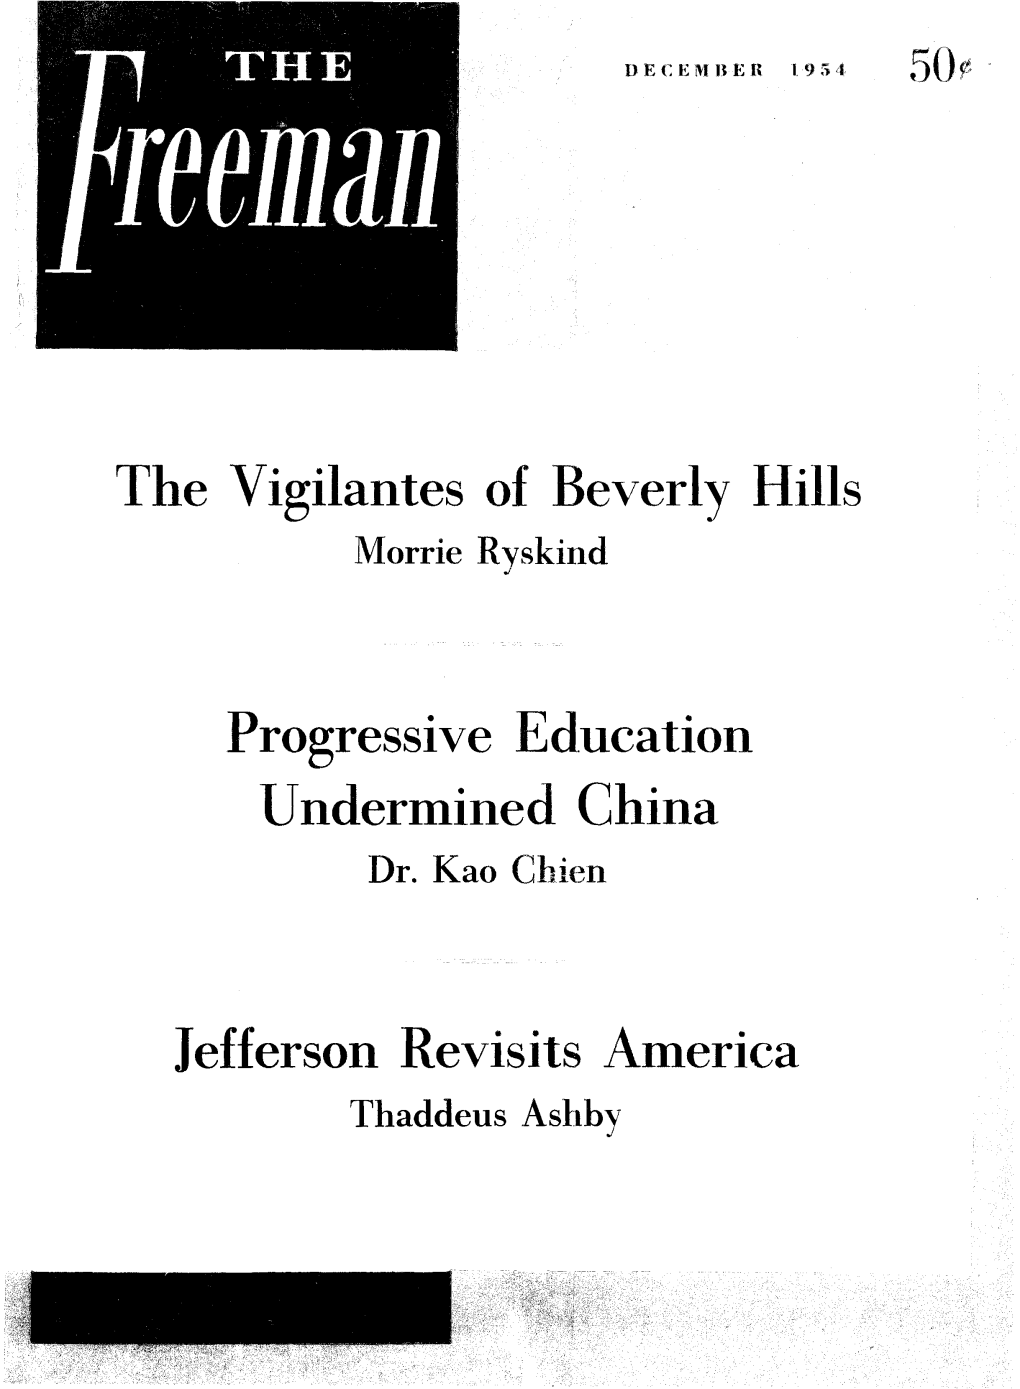 The Freeman December 1954